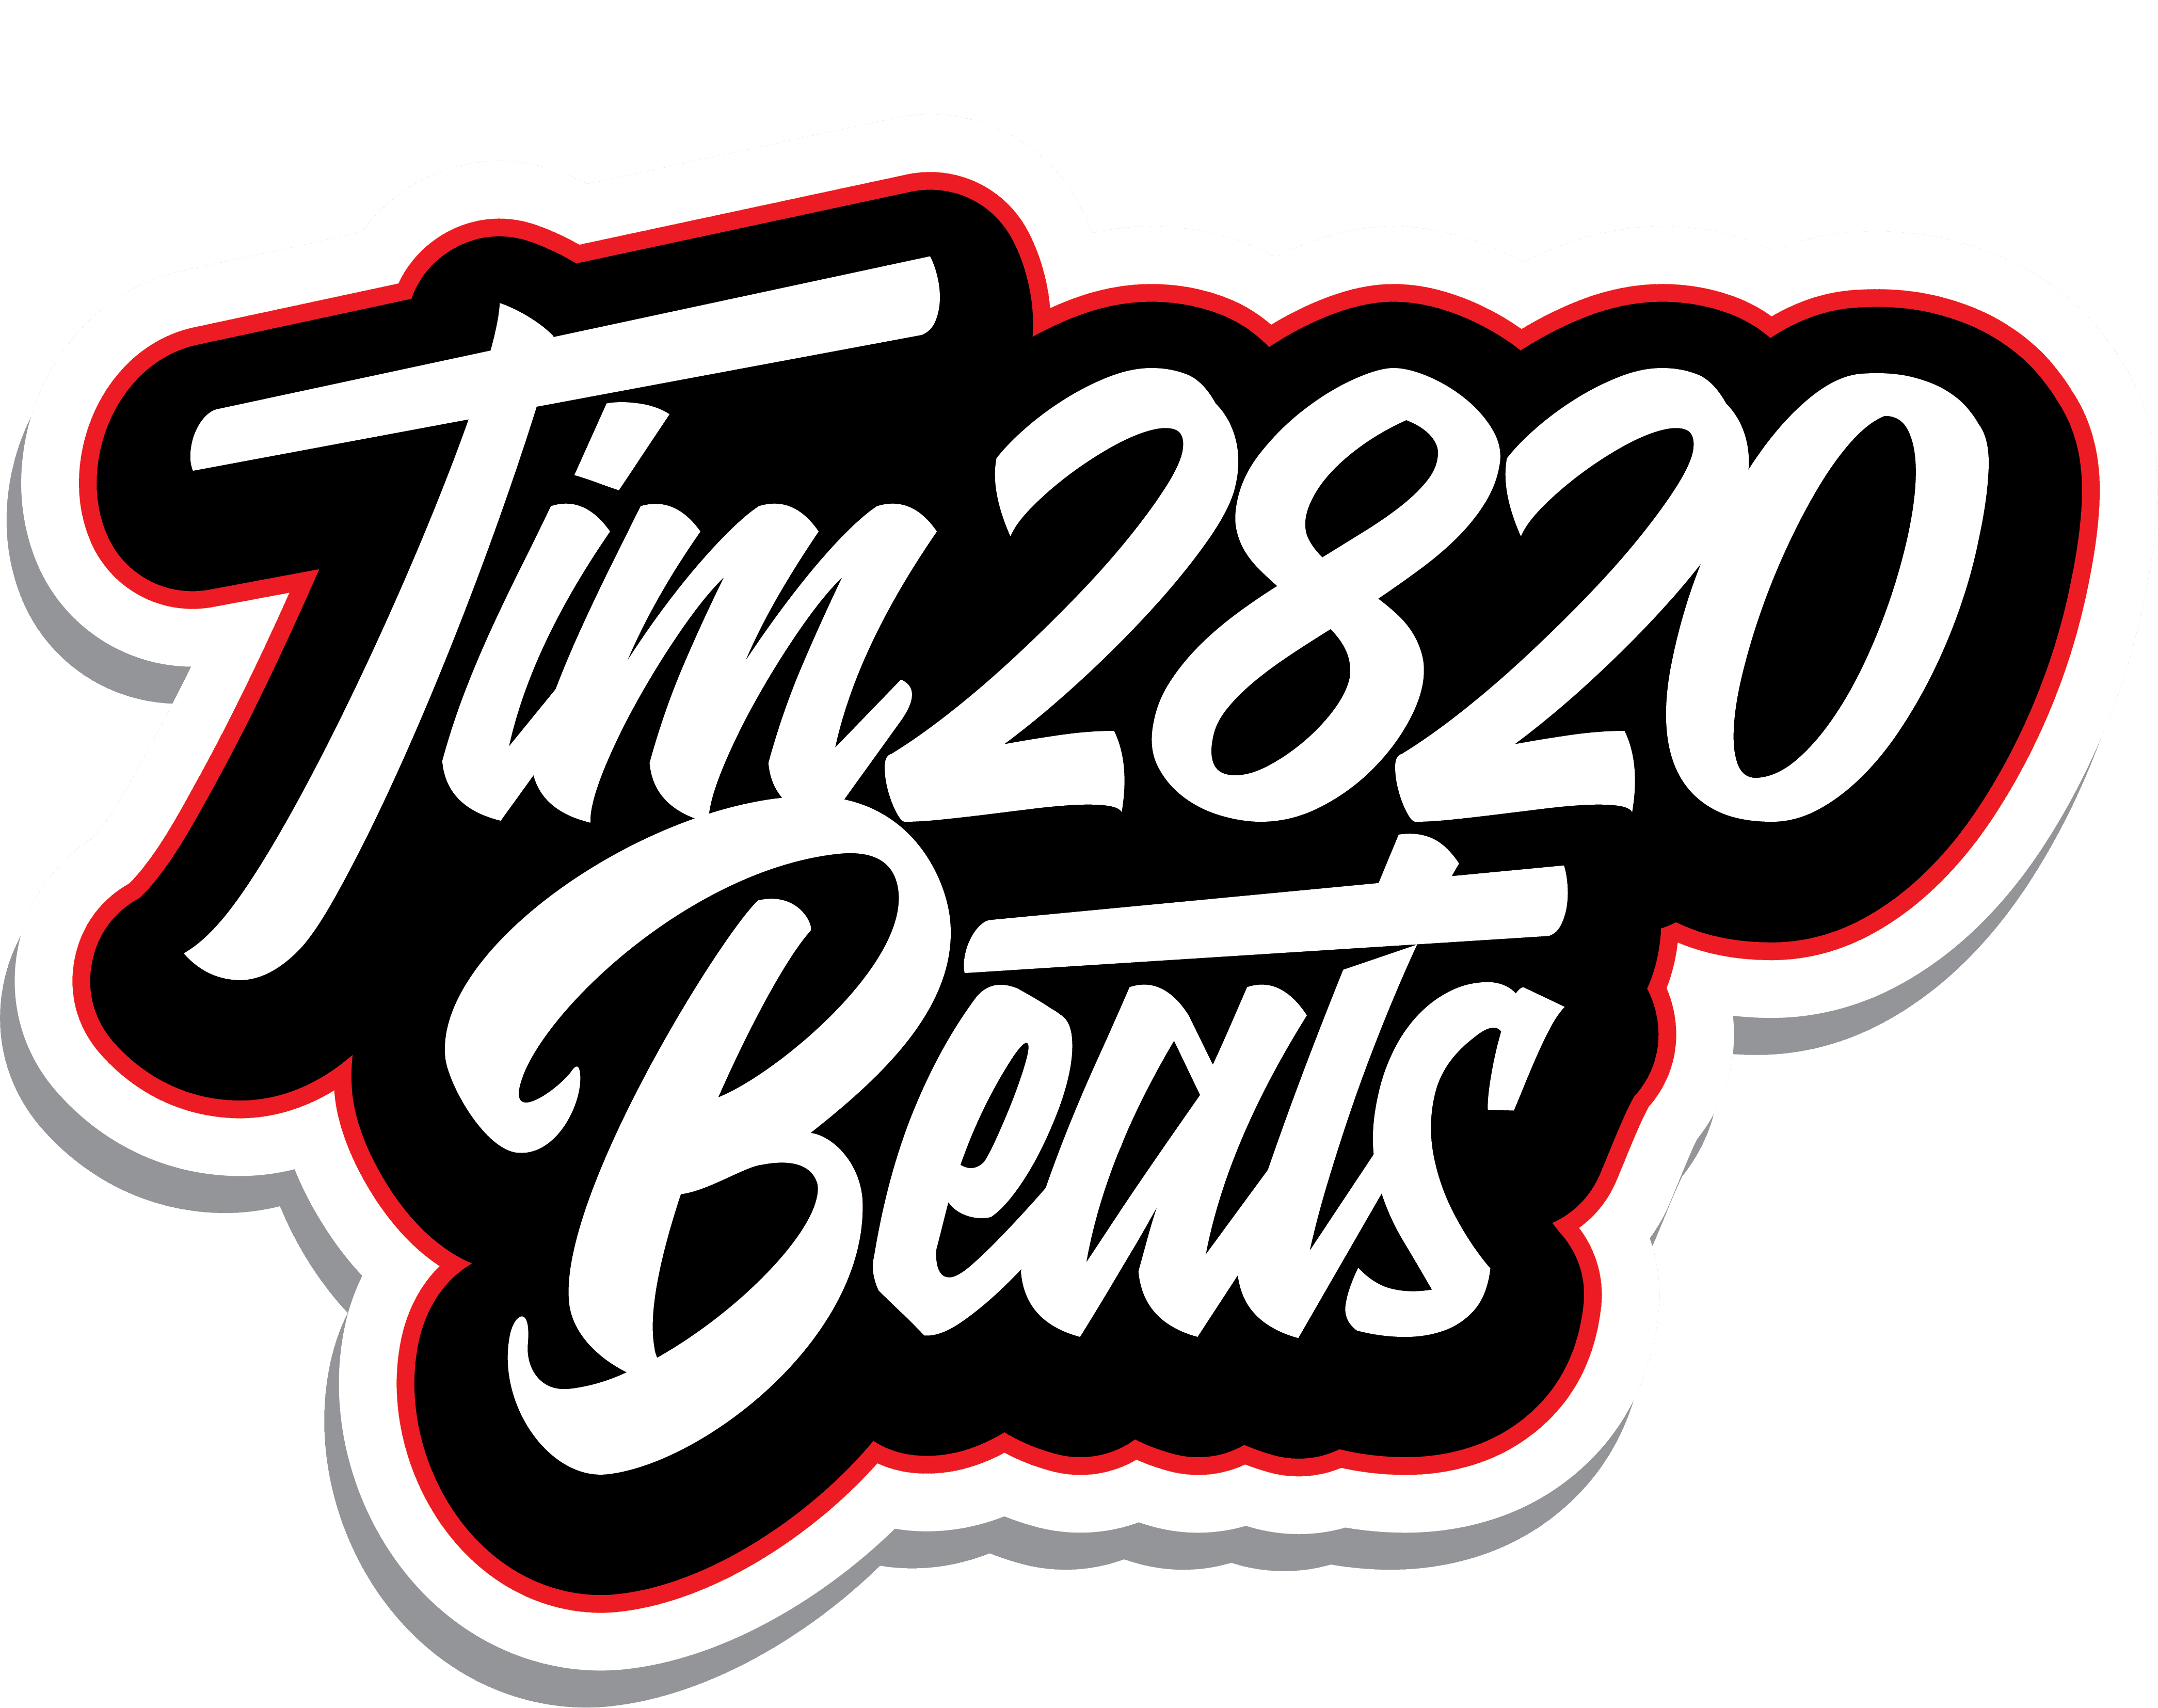 Tim2820Beats